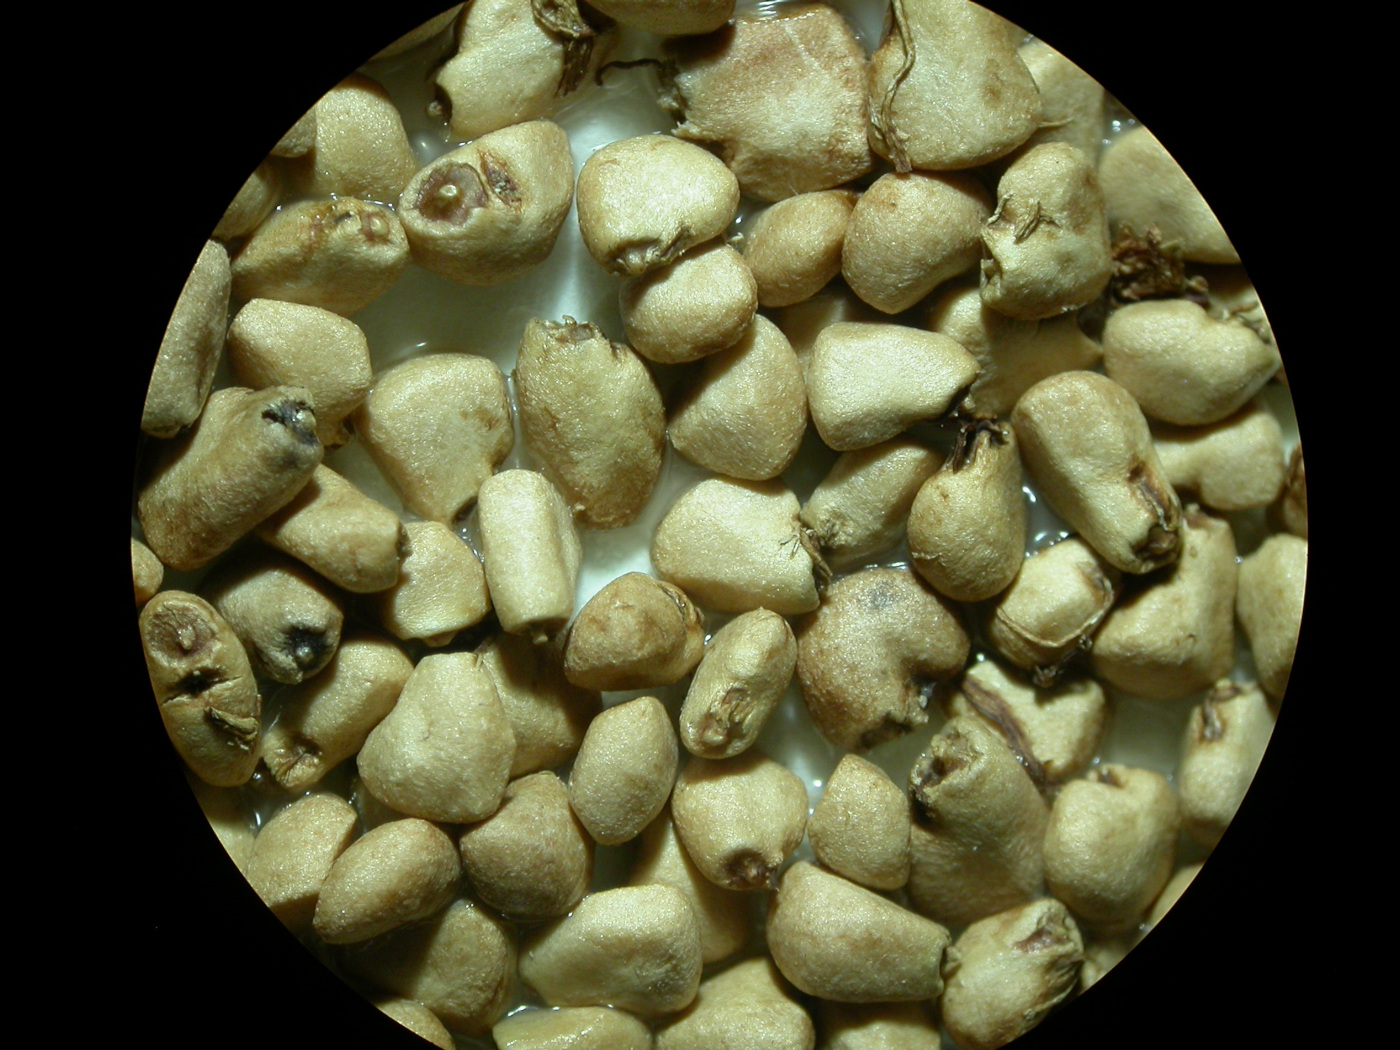 Semillas de Psidium guajava. Foto: CDF Archive, 2012.